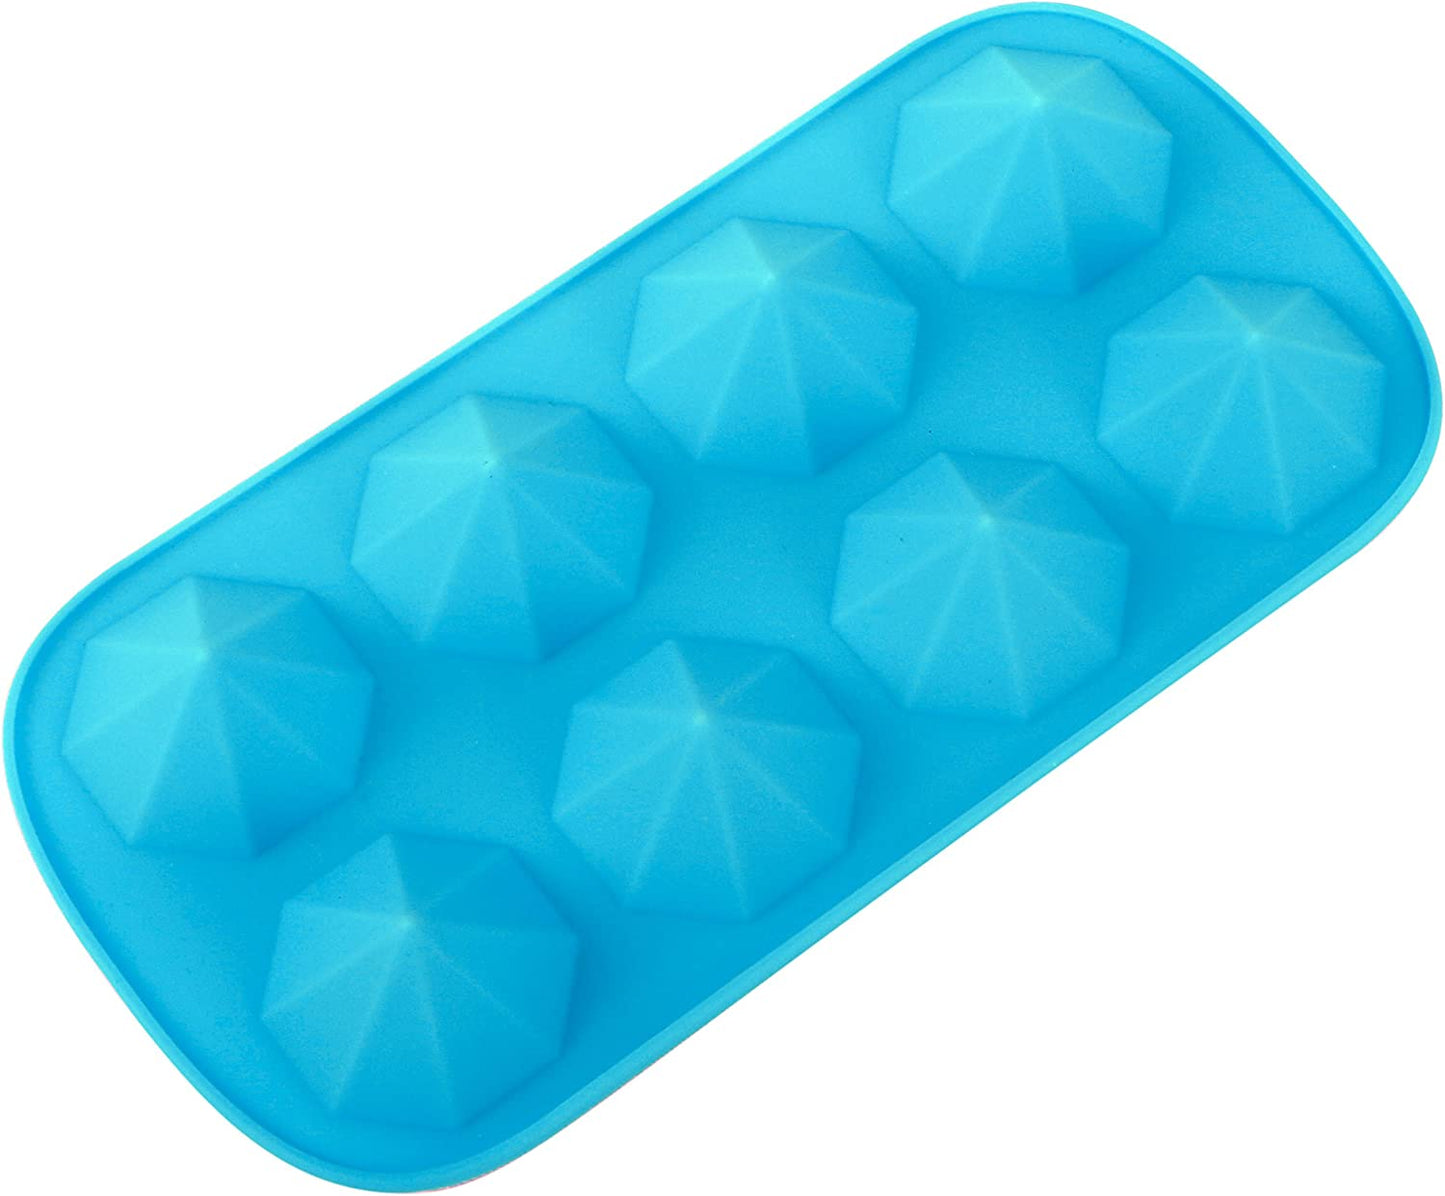 Webake diamond shape 8 cavity wax resin reusable silicone ice cube mold,2 Pack